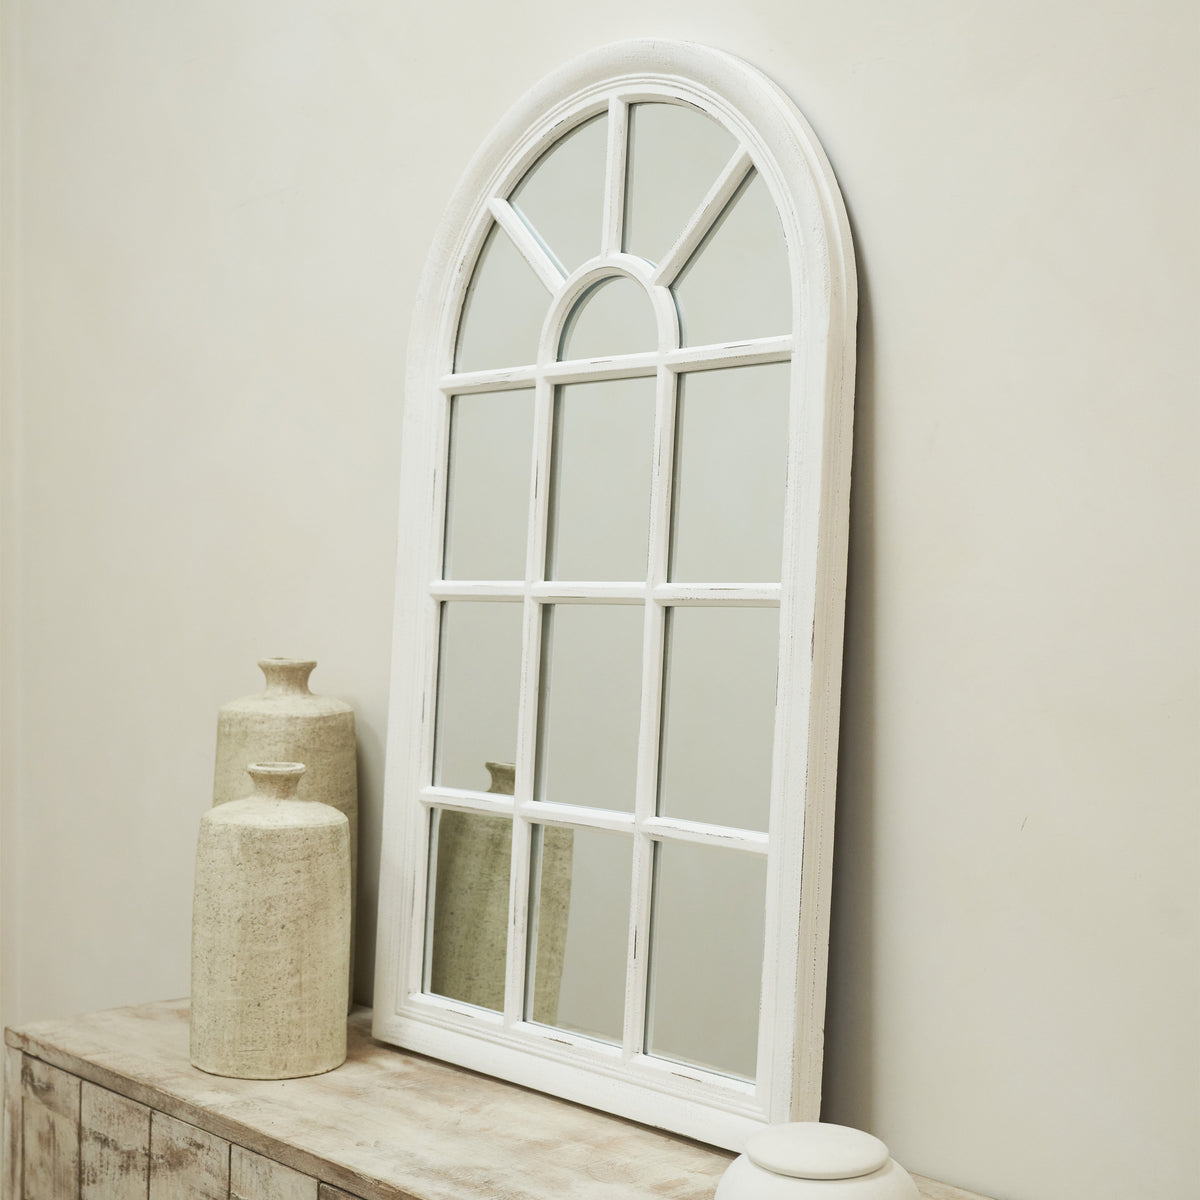 Arabella - White Arched Shabby Chic Window Mirror 100cm x 60cm